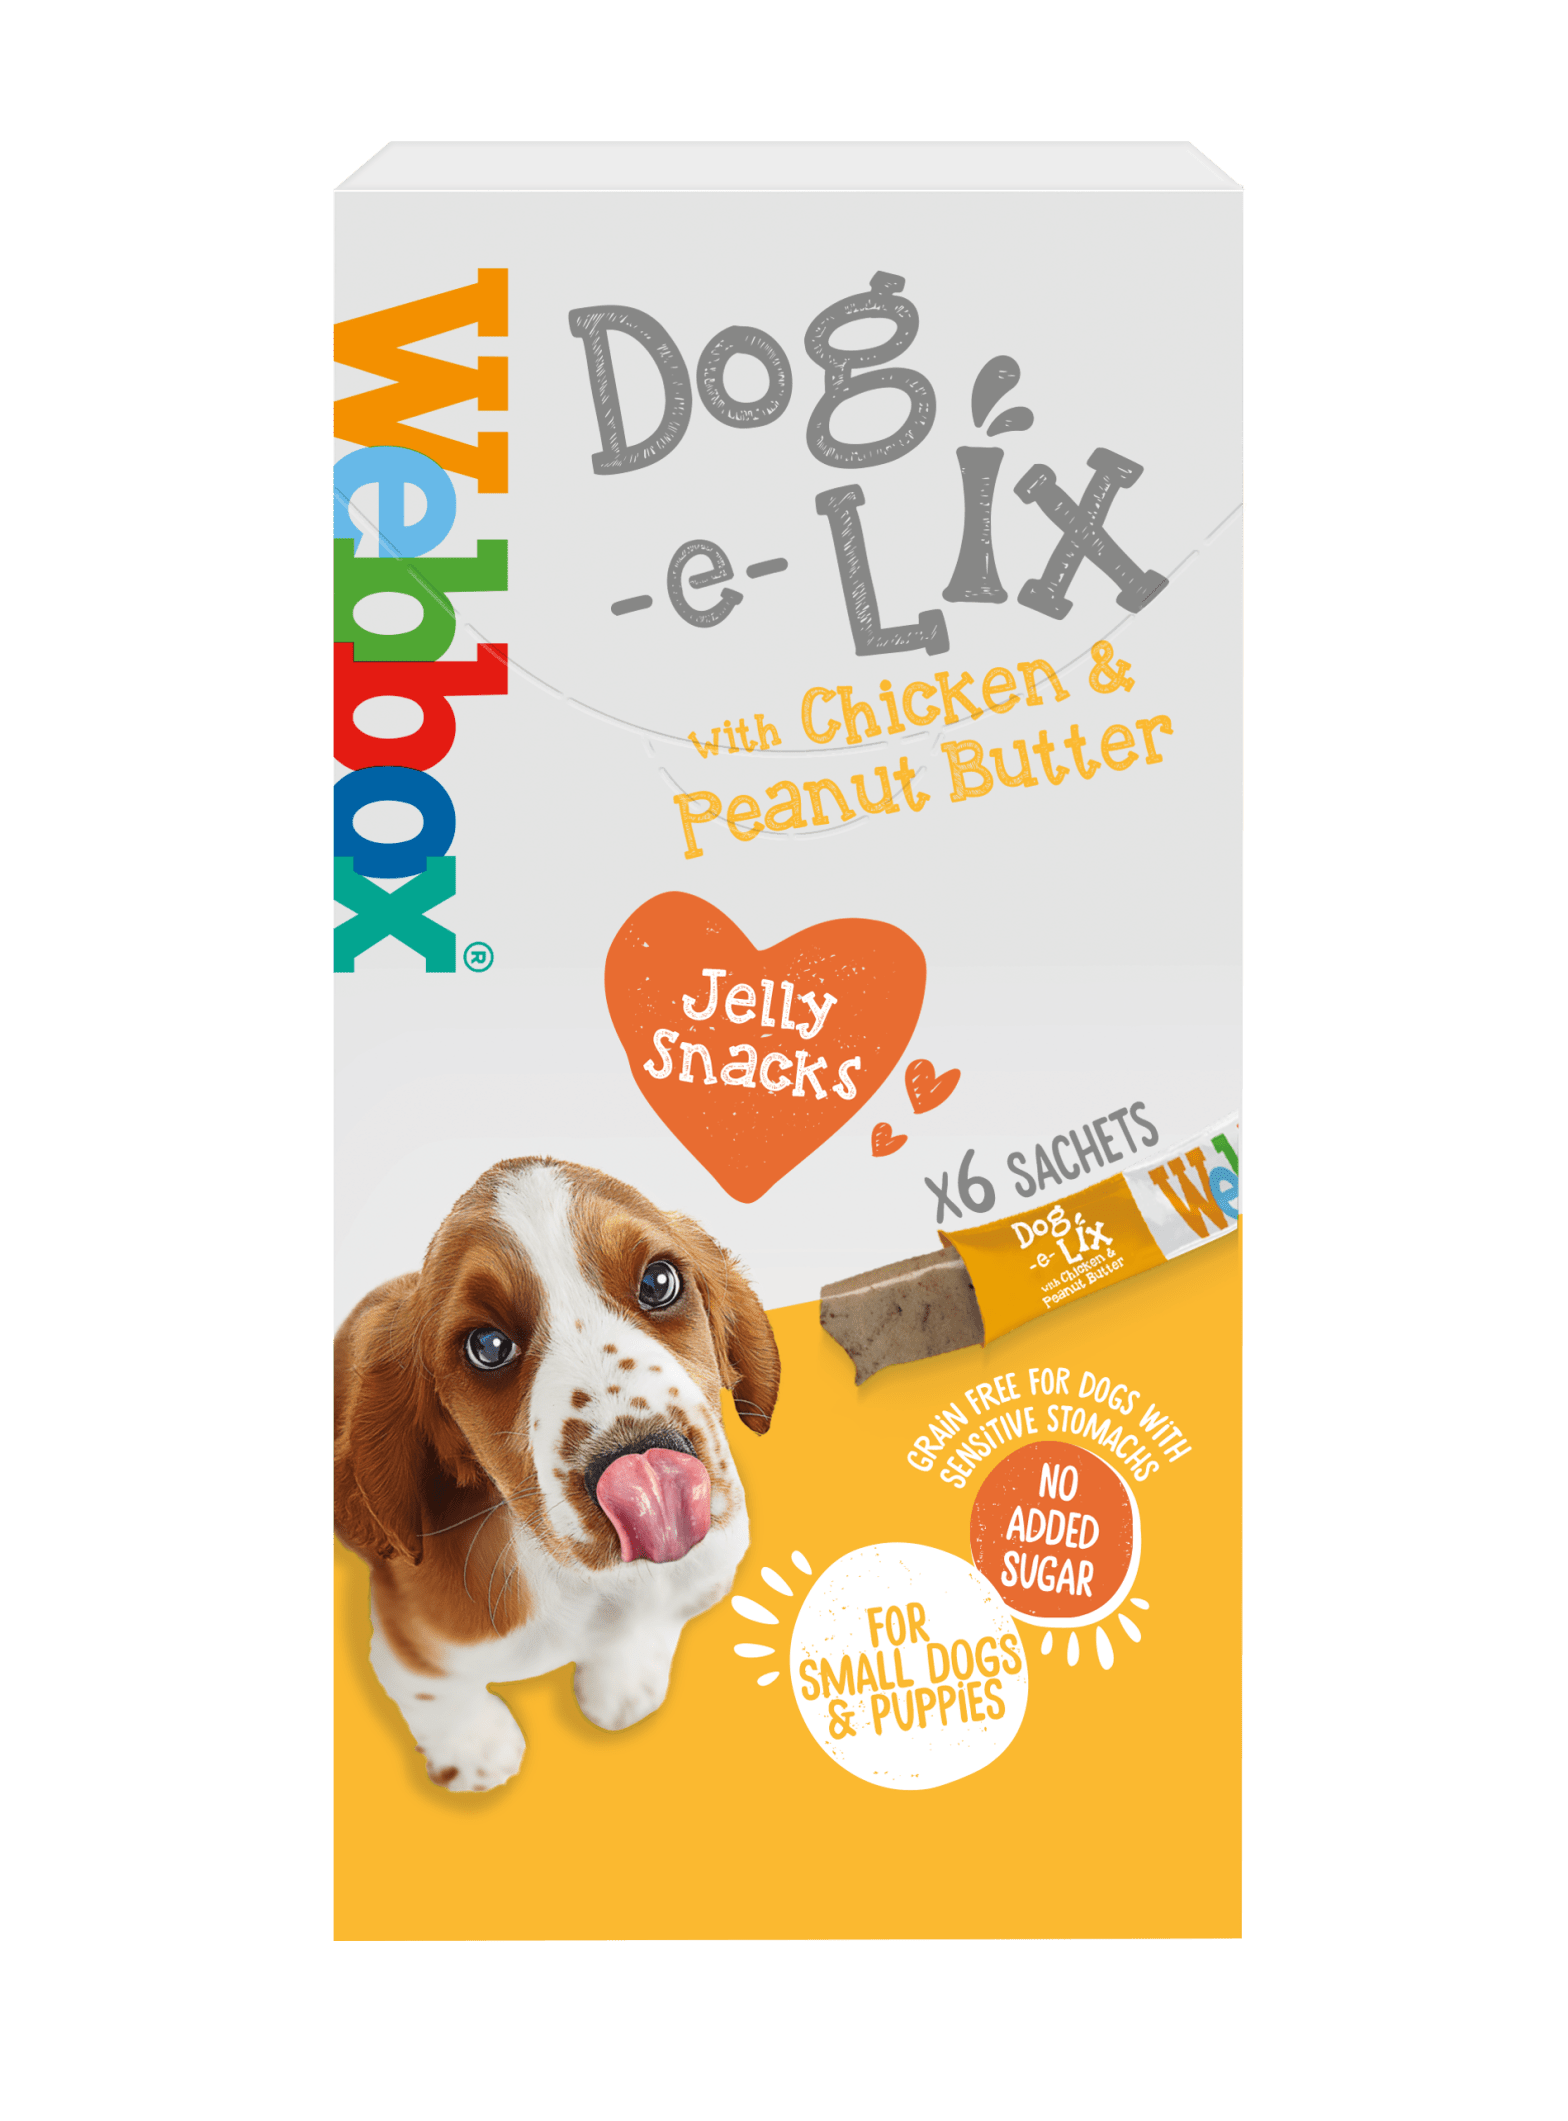 Webbox Dog e Lix with Chicken & Peanut Butter Creamy Dog Treats